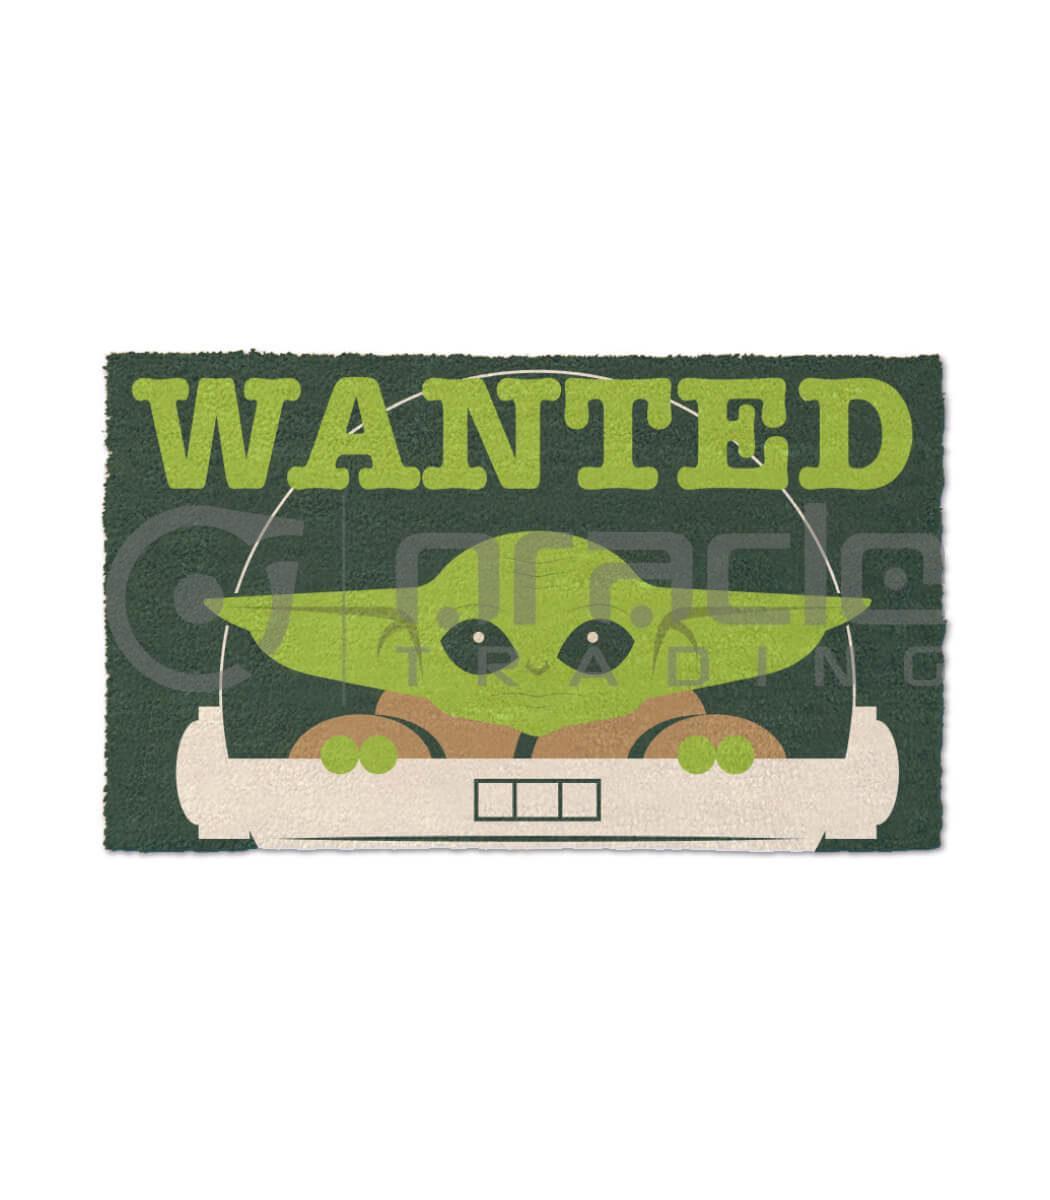 Star Wars: The Mandalorian Doormat - Wanted